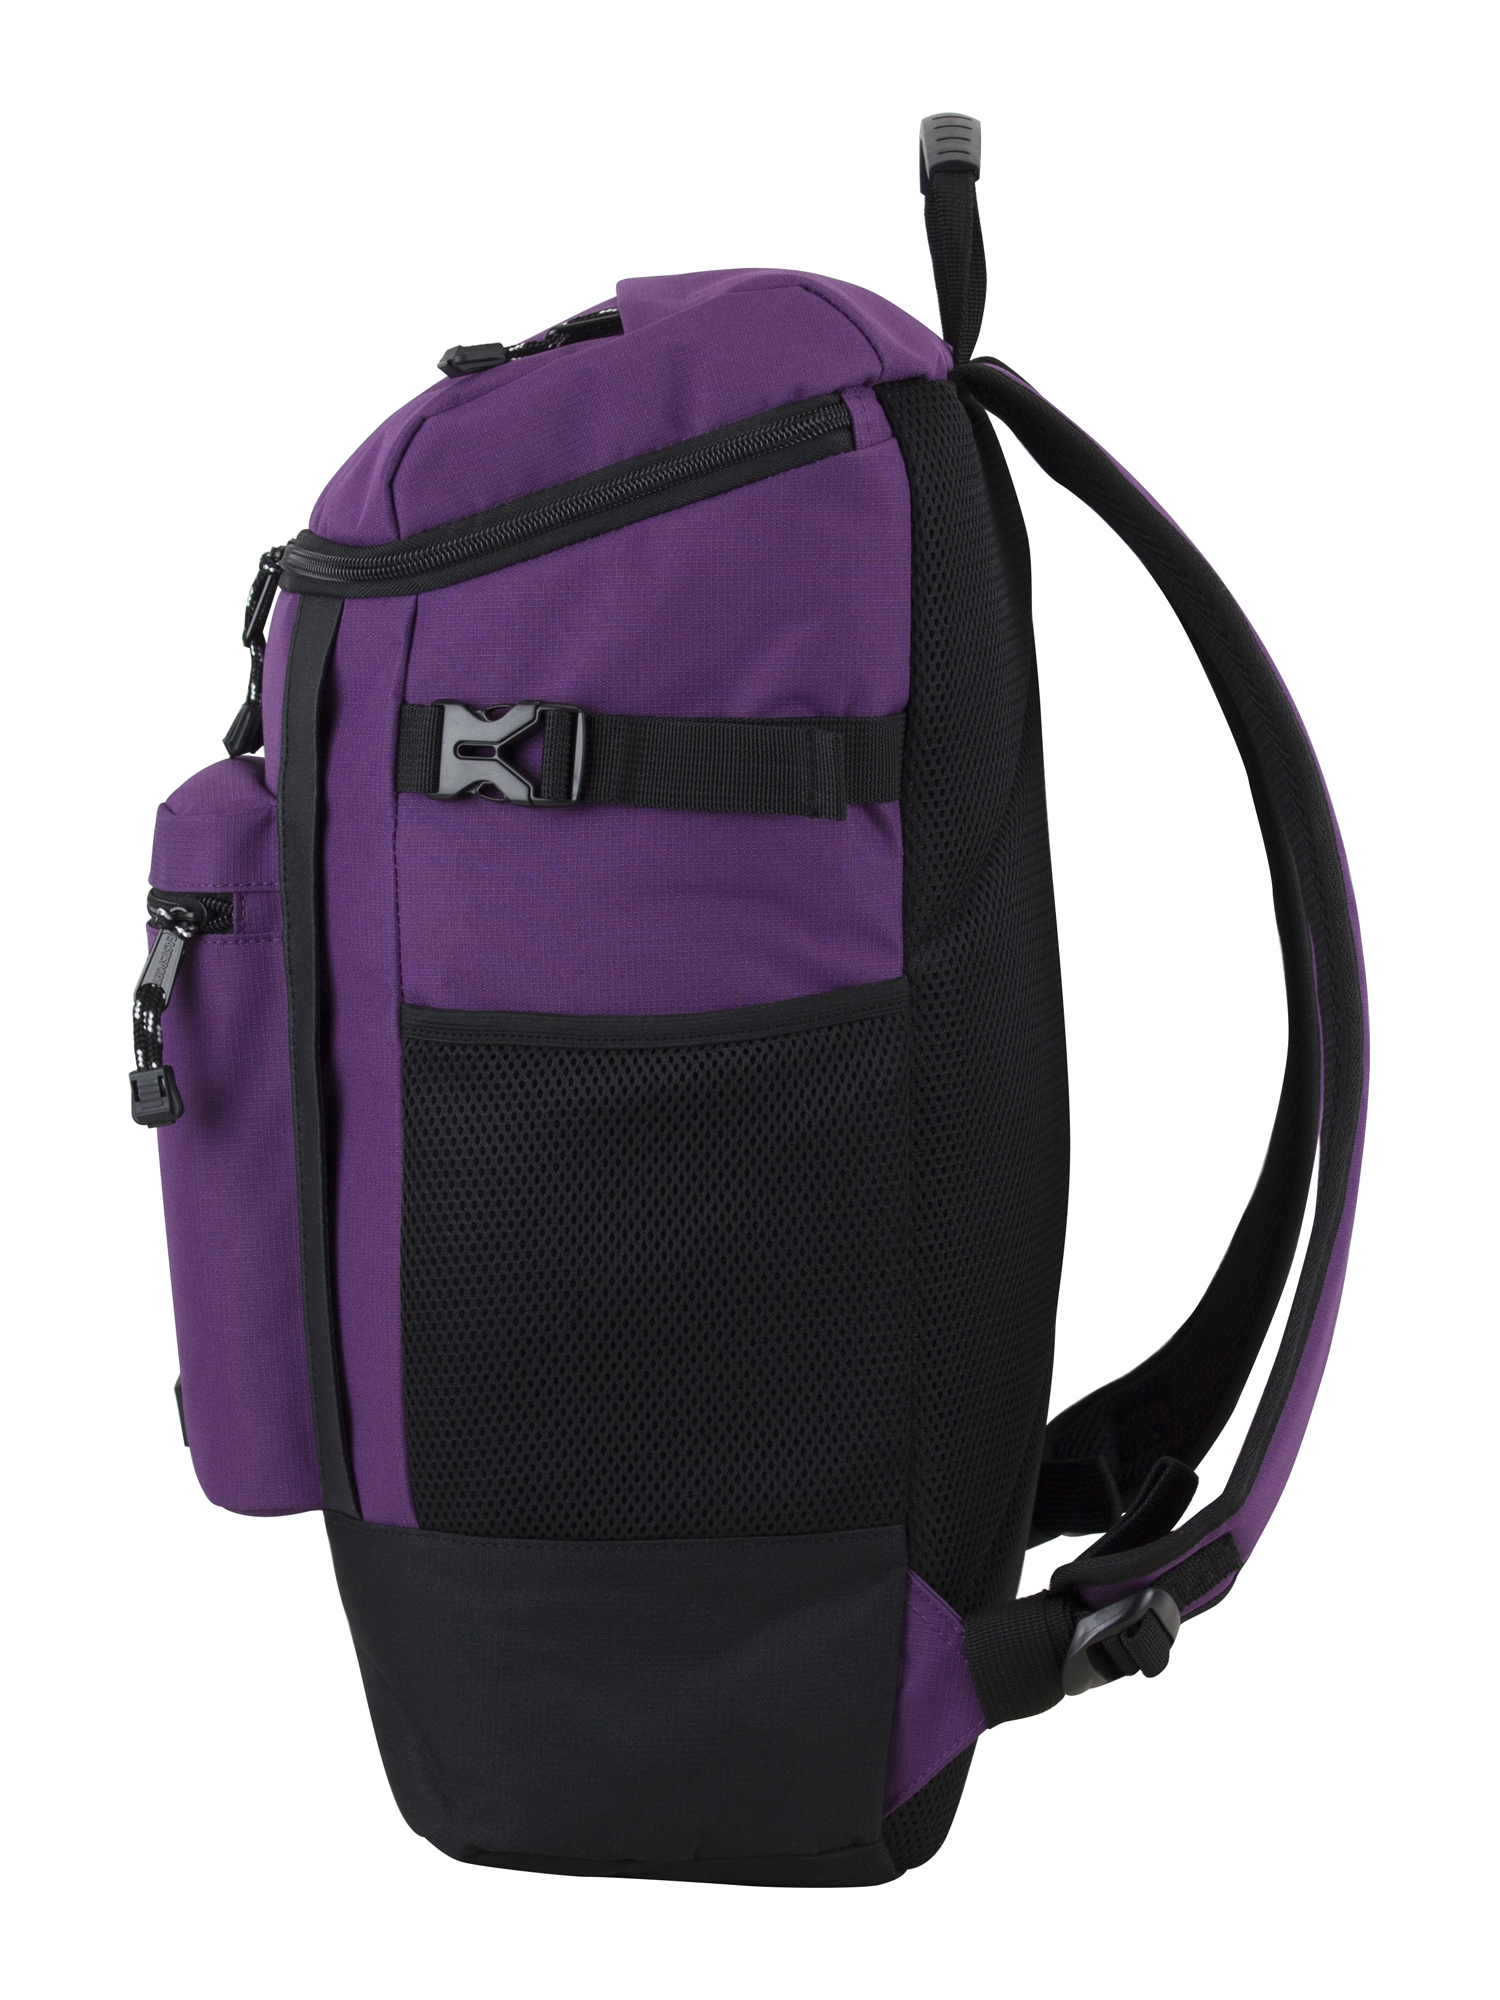 Eastsport Unisex Rival 18.5" Laptop Backpack, Berry Parfait Purple - image 5 of 9